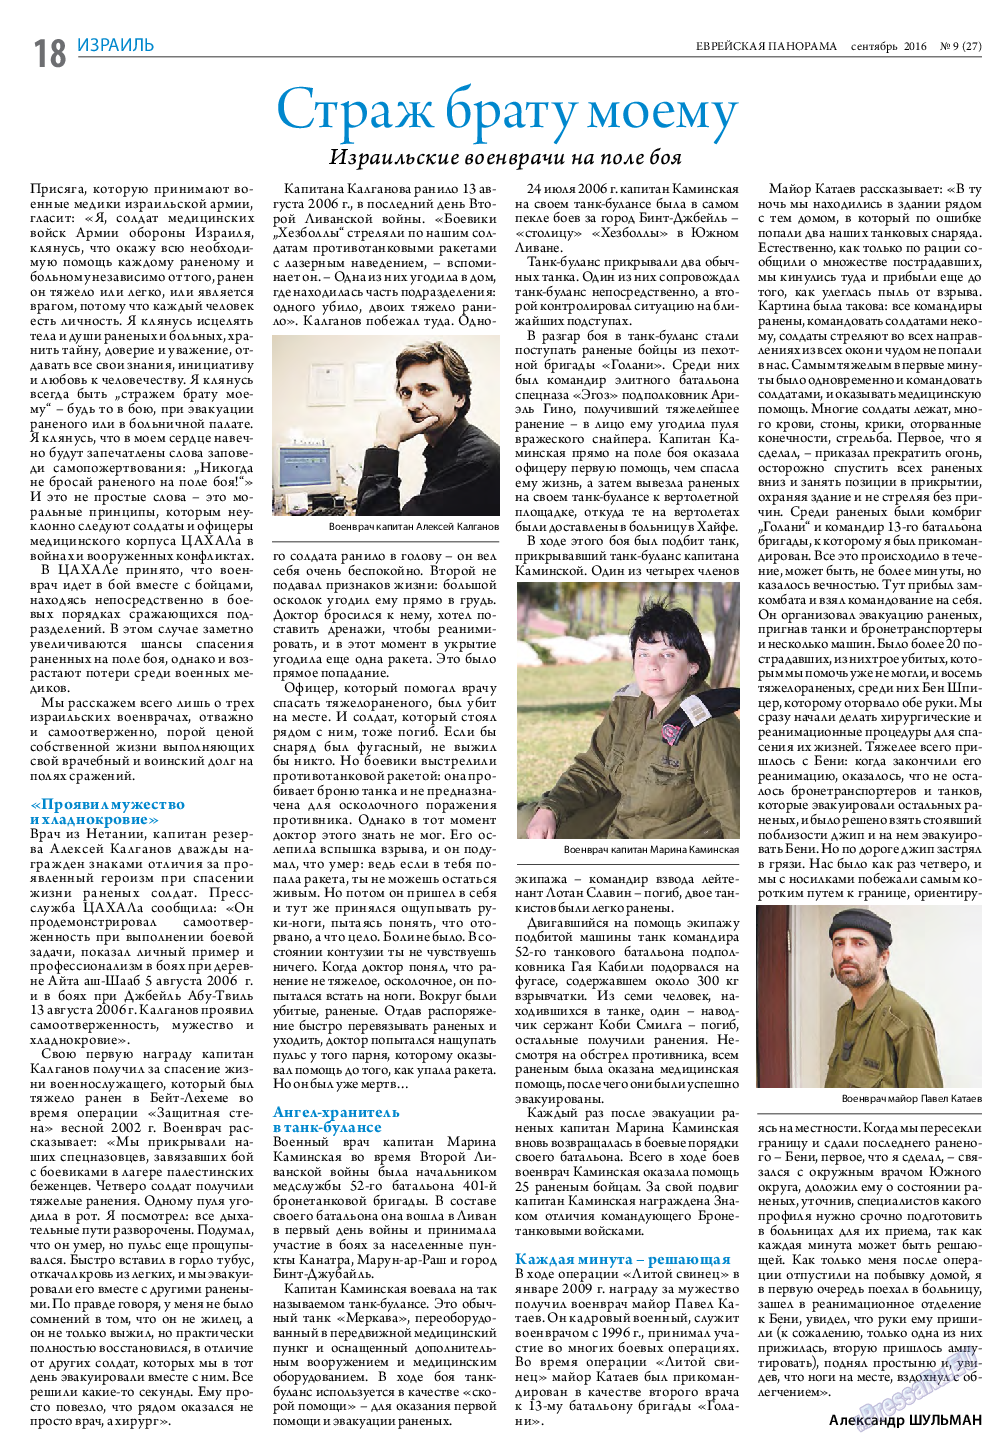 Еврейская панорама, газета. 2016 №9 стр.18